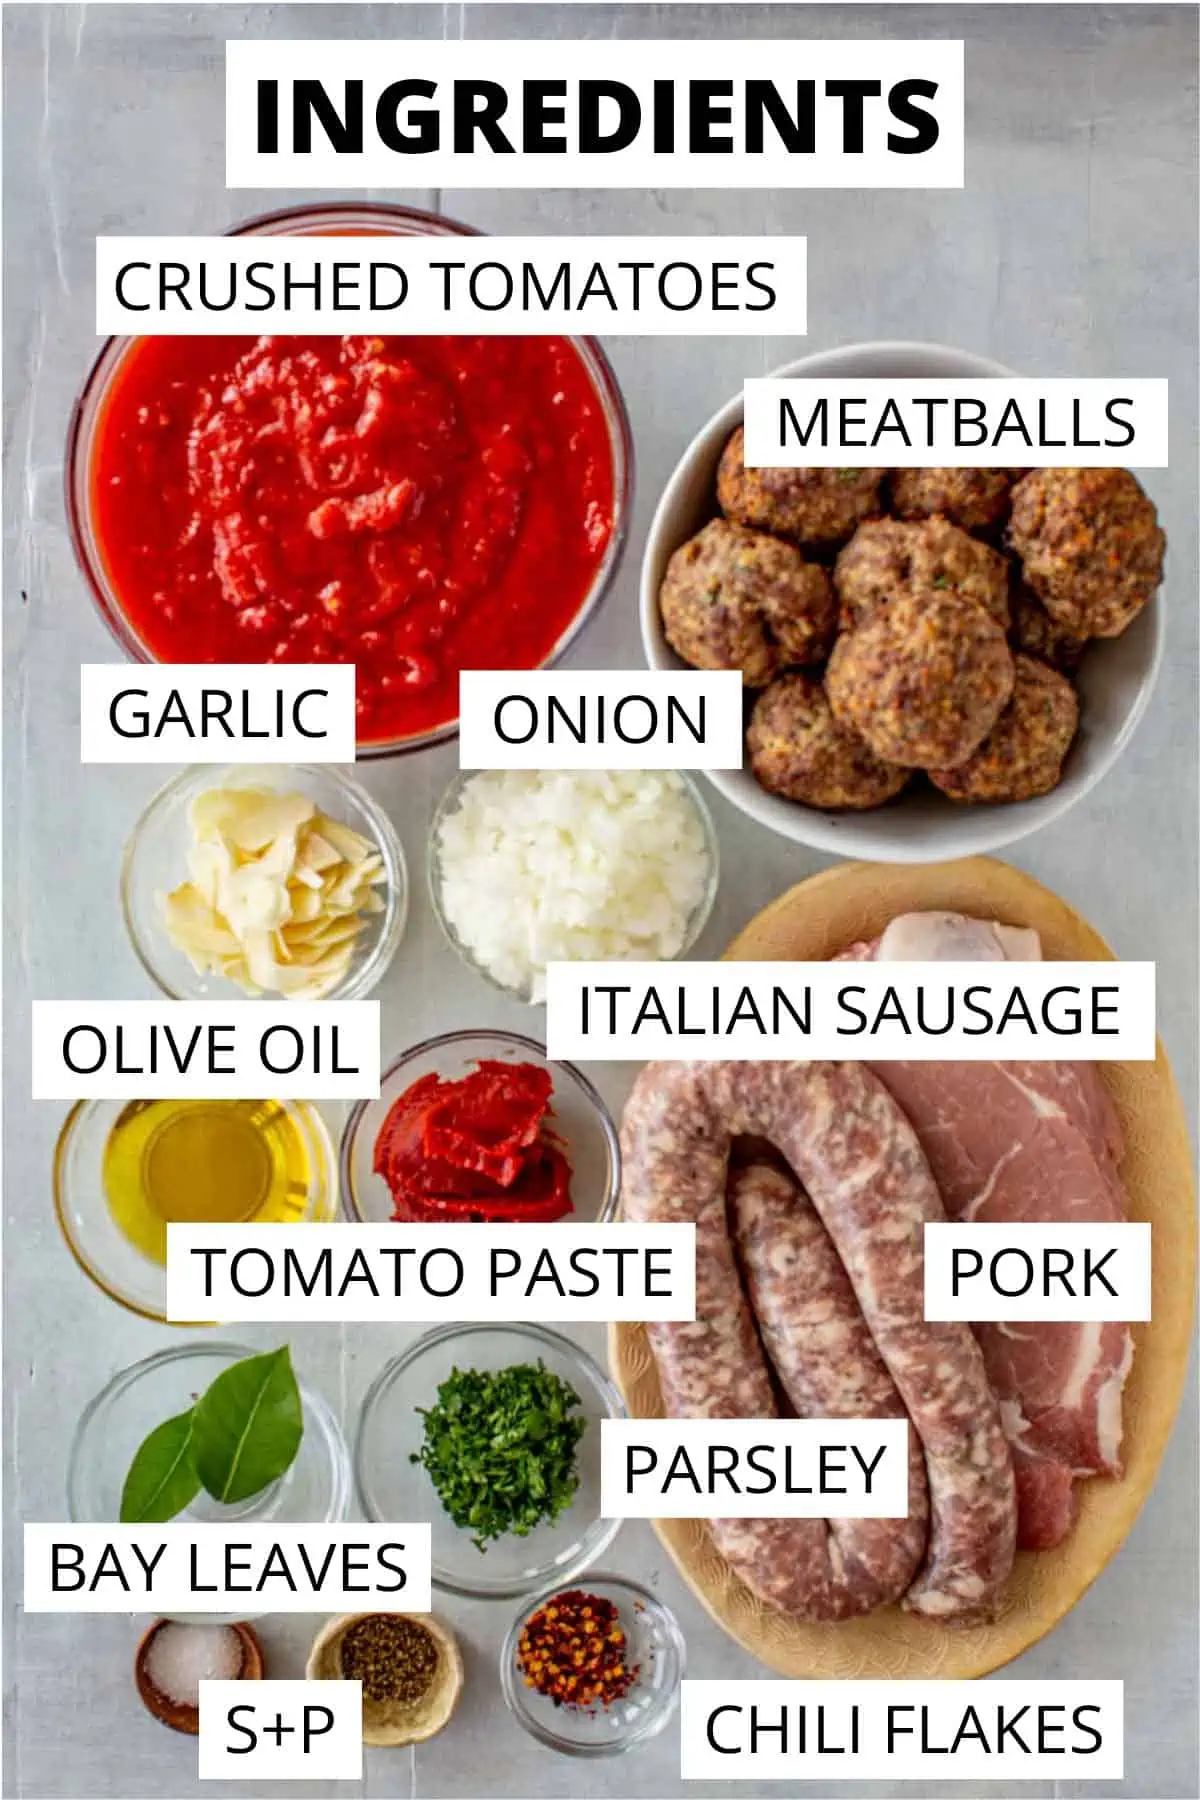 Ingredients for Italian Sunday gravy or sugo.